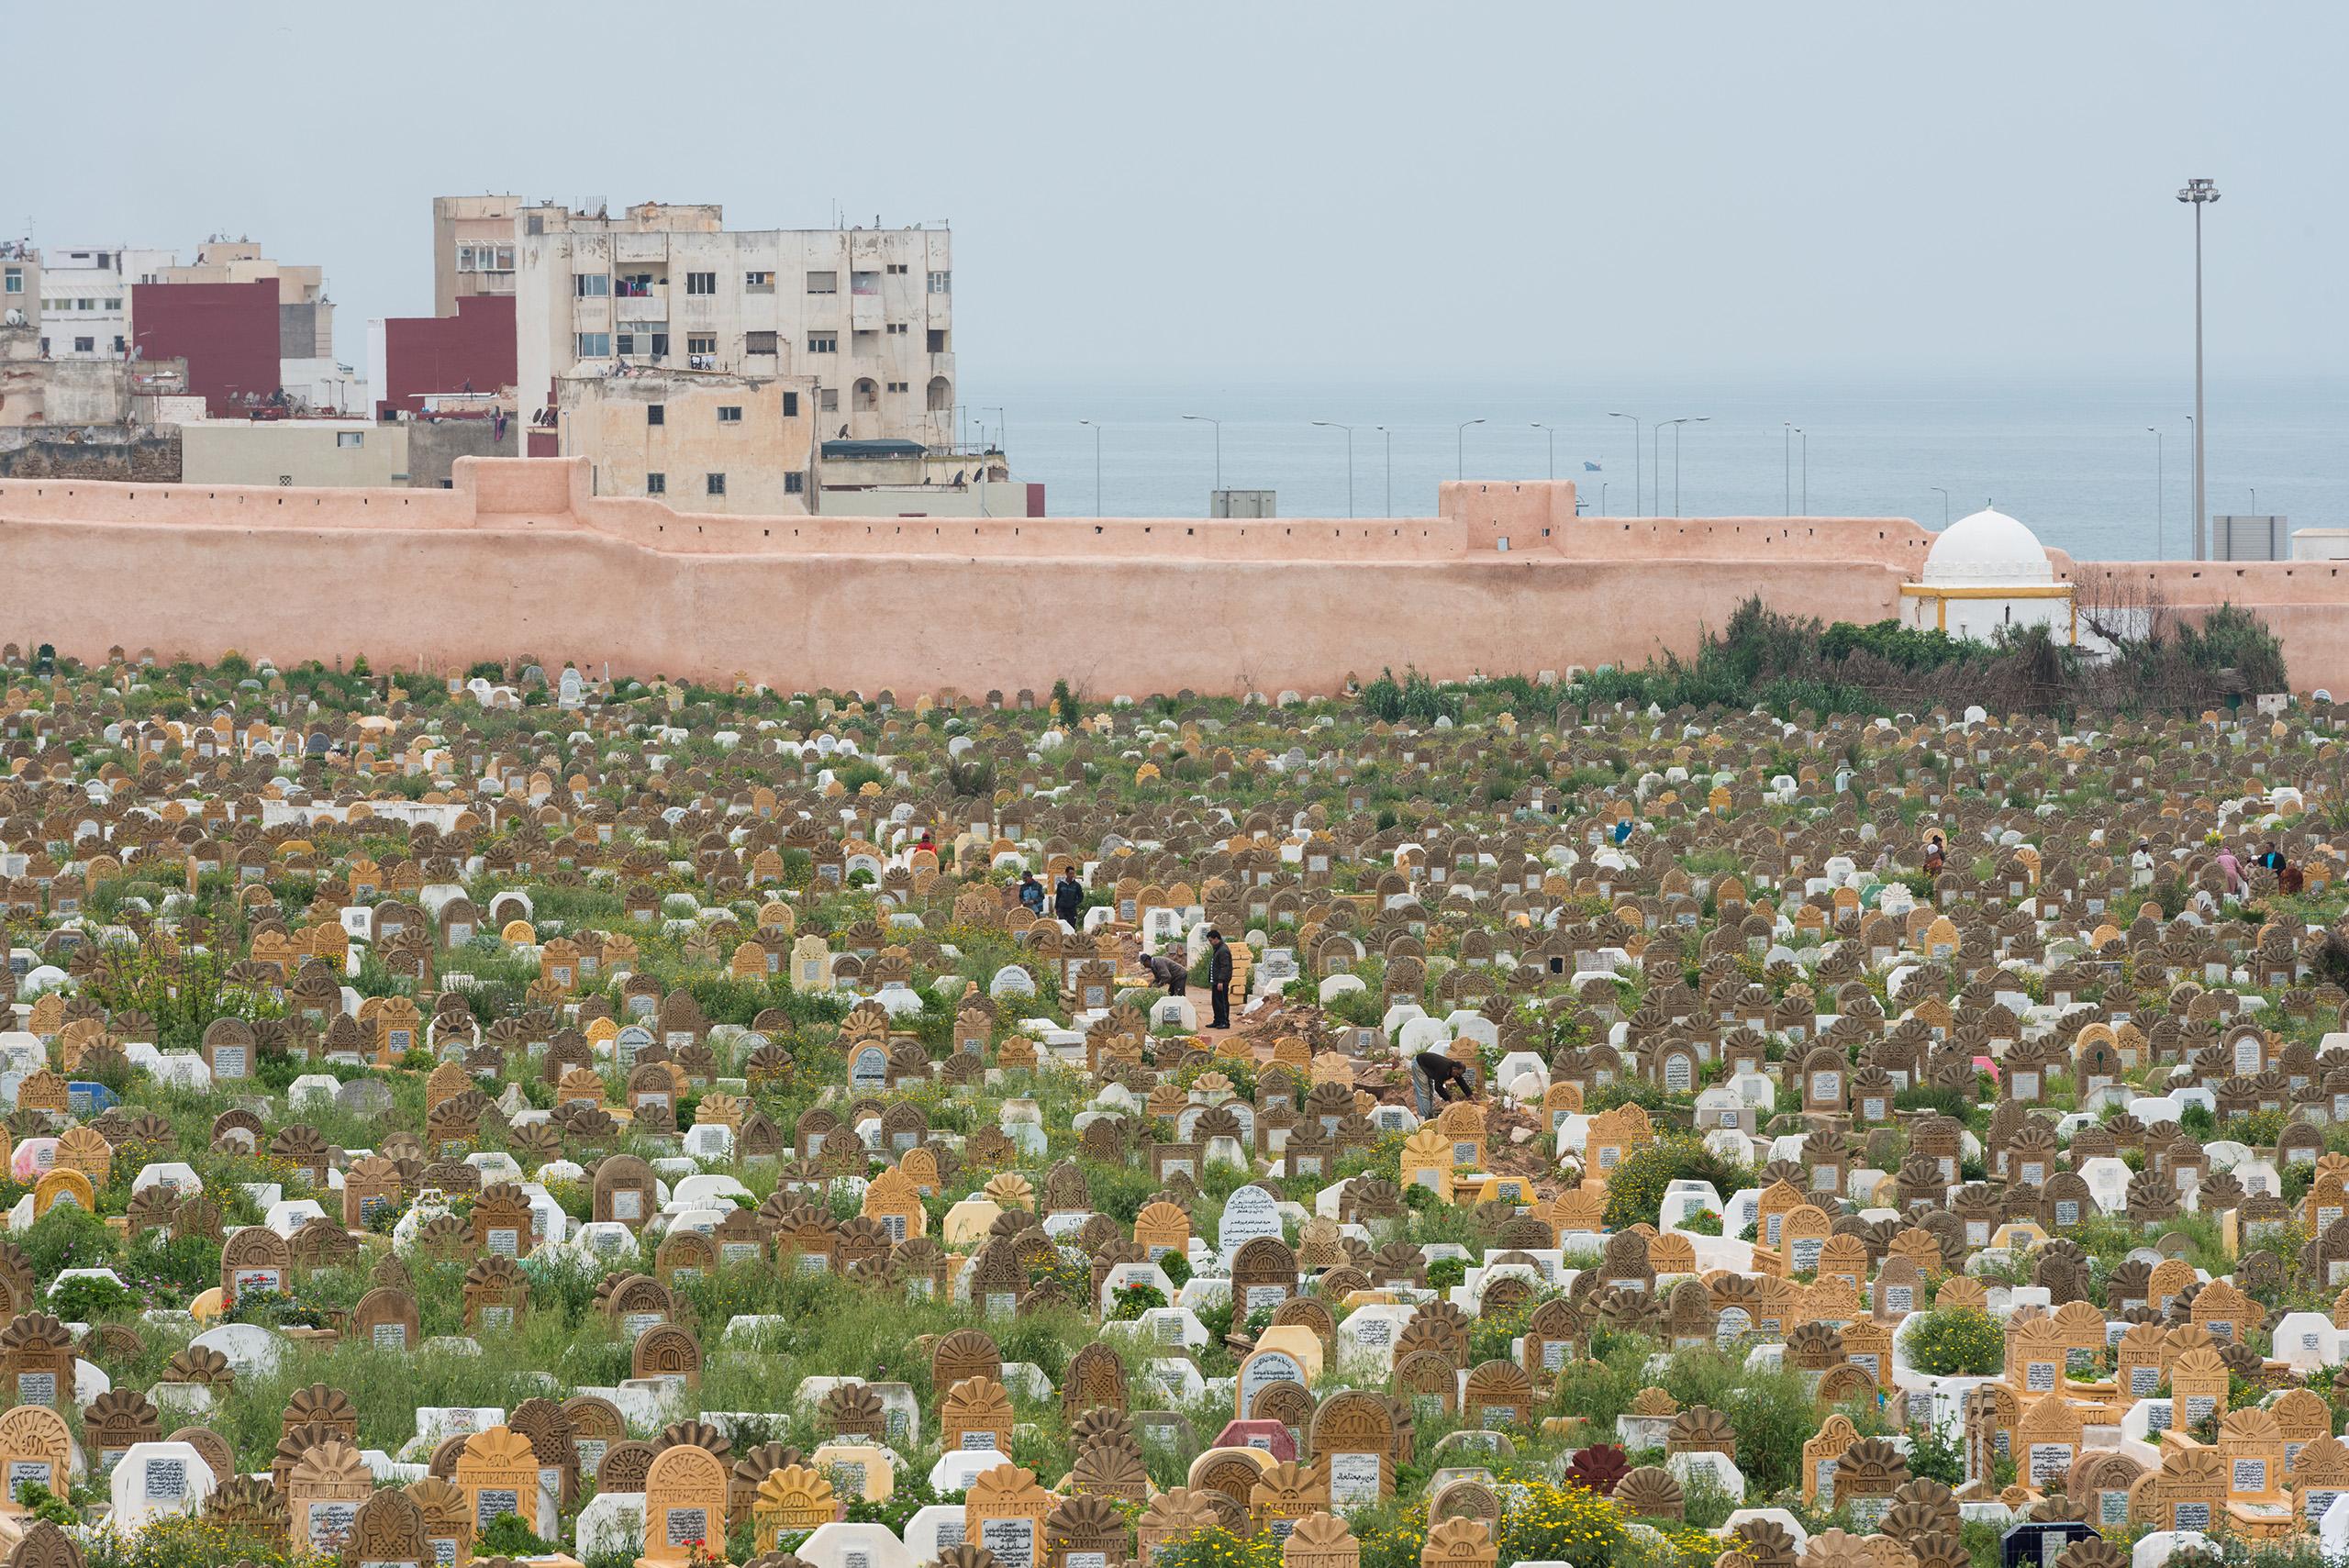 Image of Rabat Cemetery by Luka Esenko